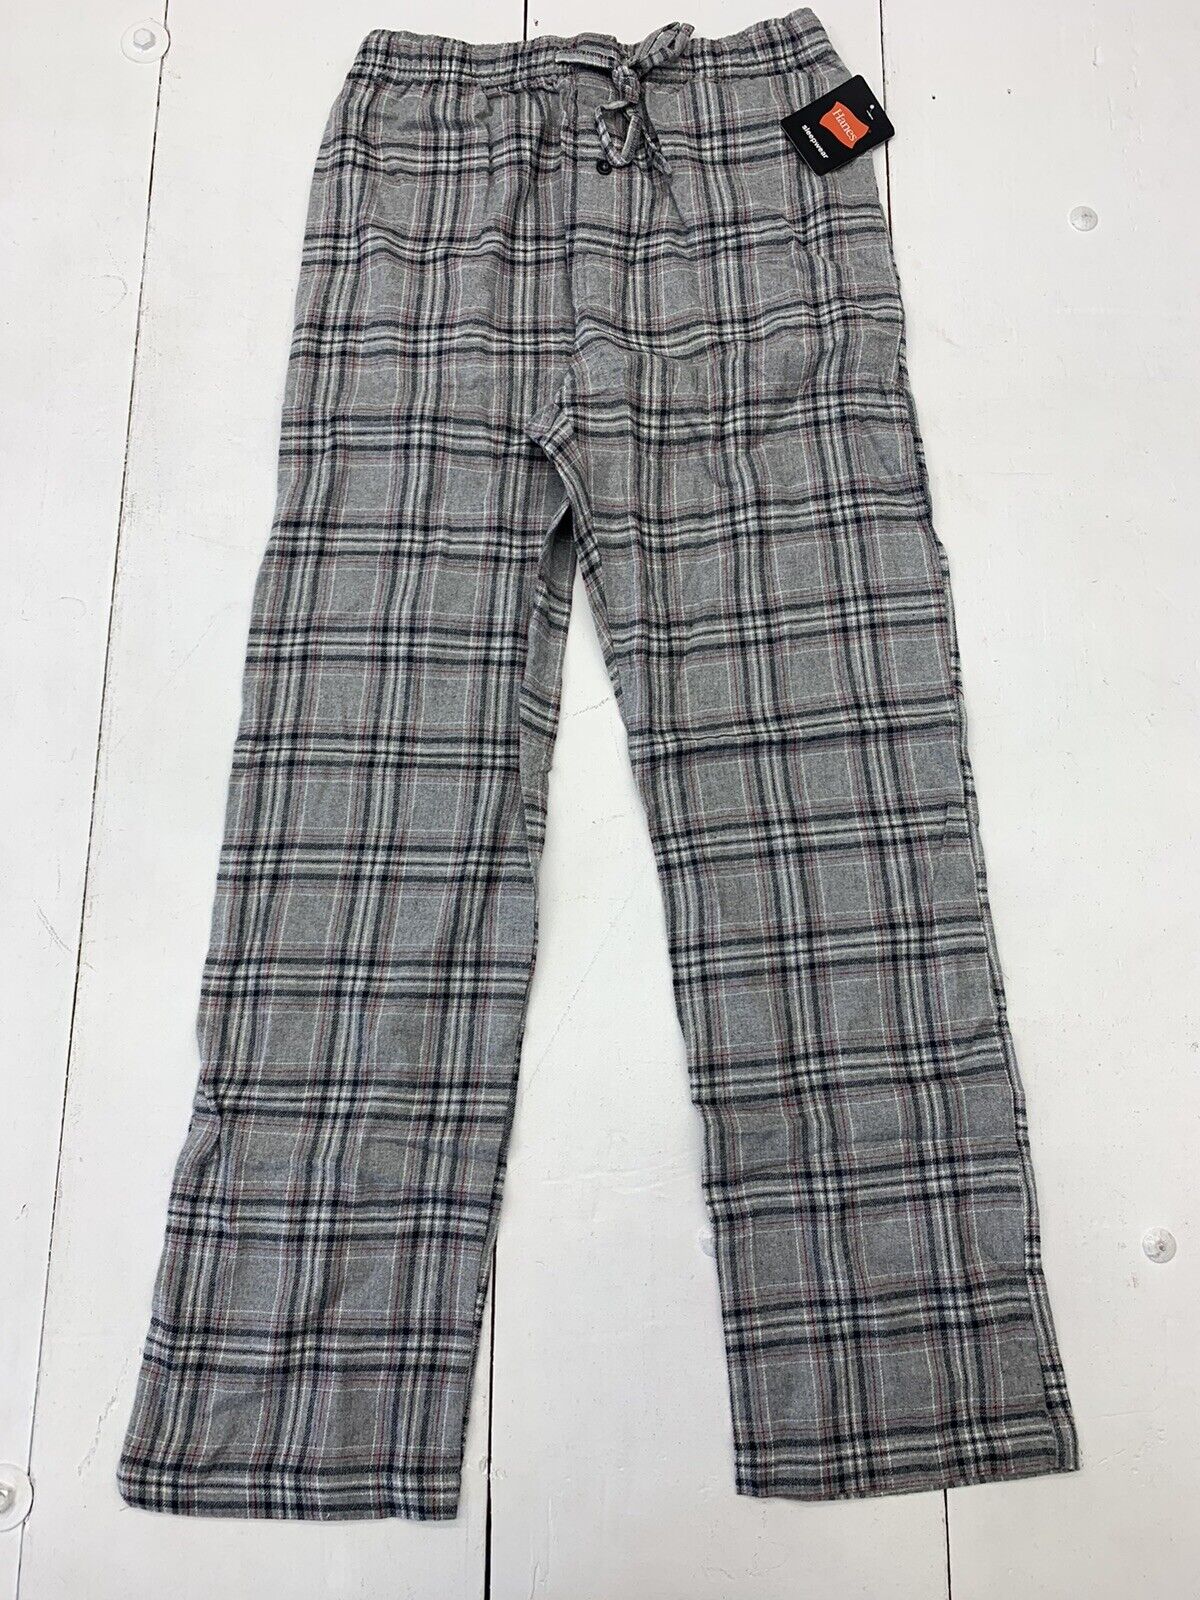 Hanes Men's Woven Pajama Pant, Black Plaid, Small at Amazon Men's Clothing  store